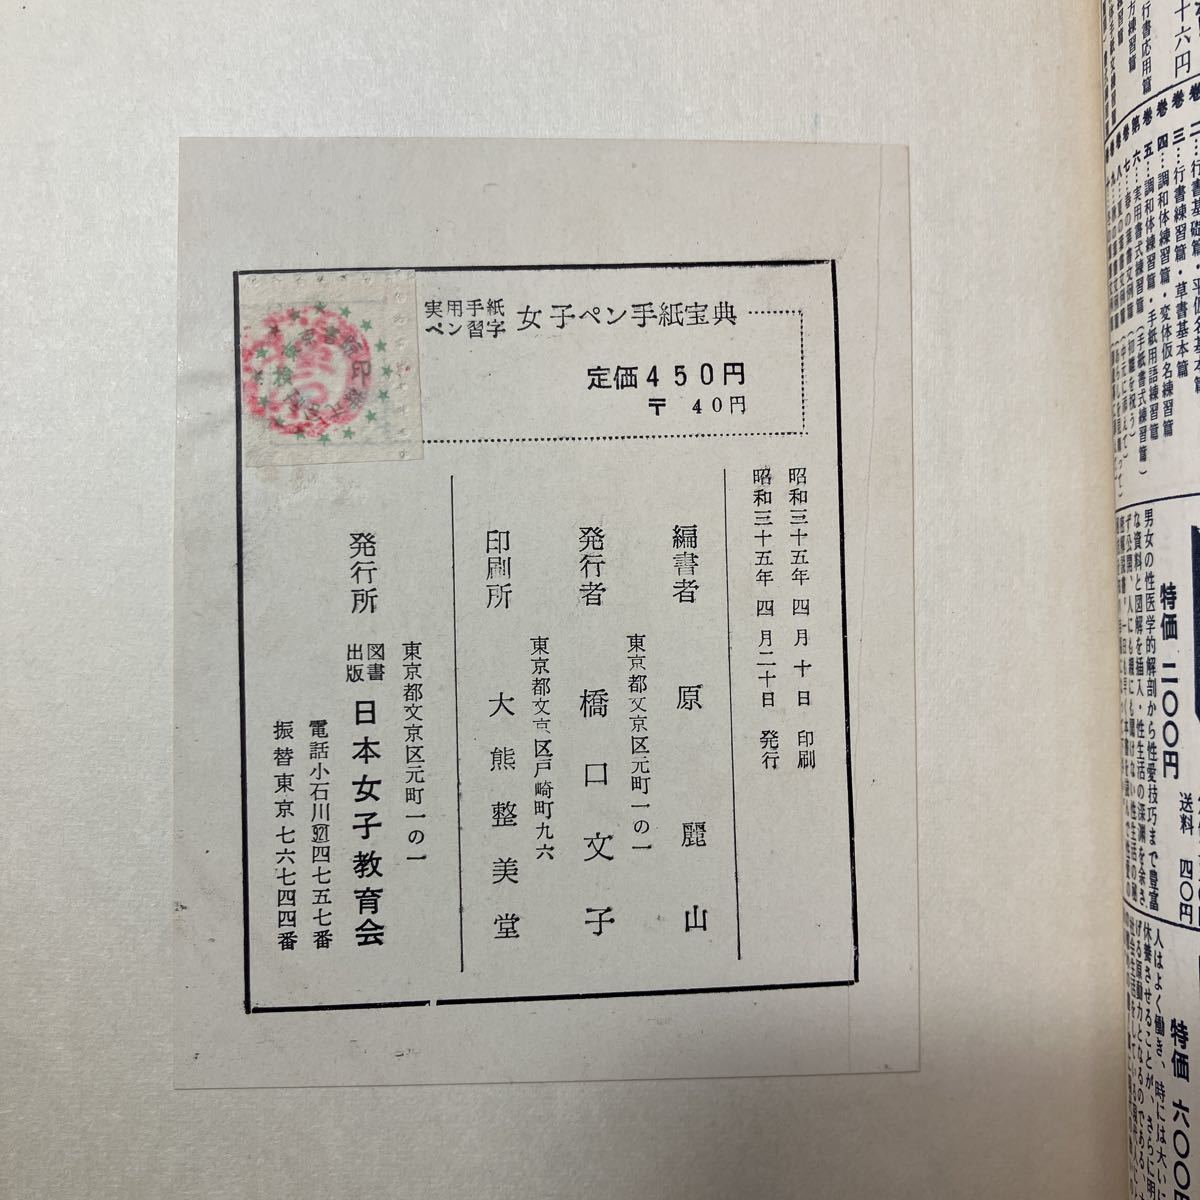 zaa-475♪ペン習字実用手紙 女子ペン手紙宝典　原麗山( 編 ) 　日本女子教育会 (1960/4/20)